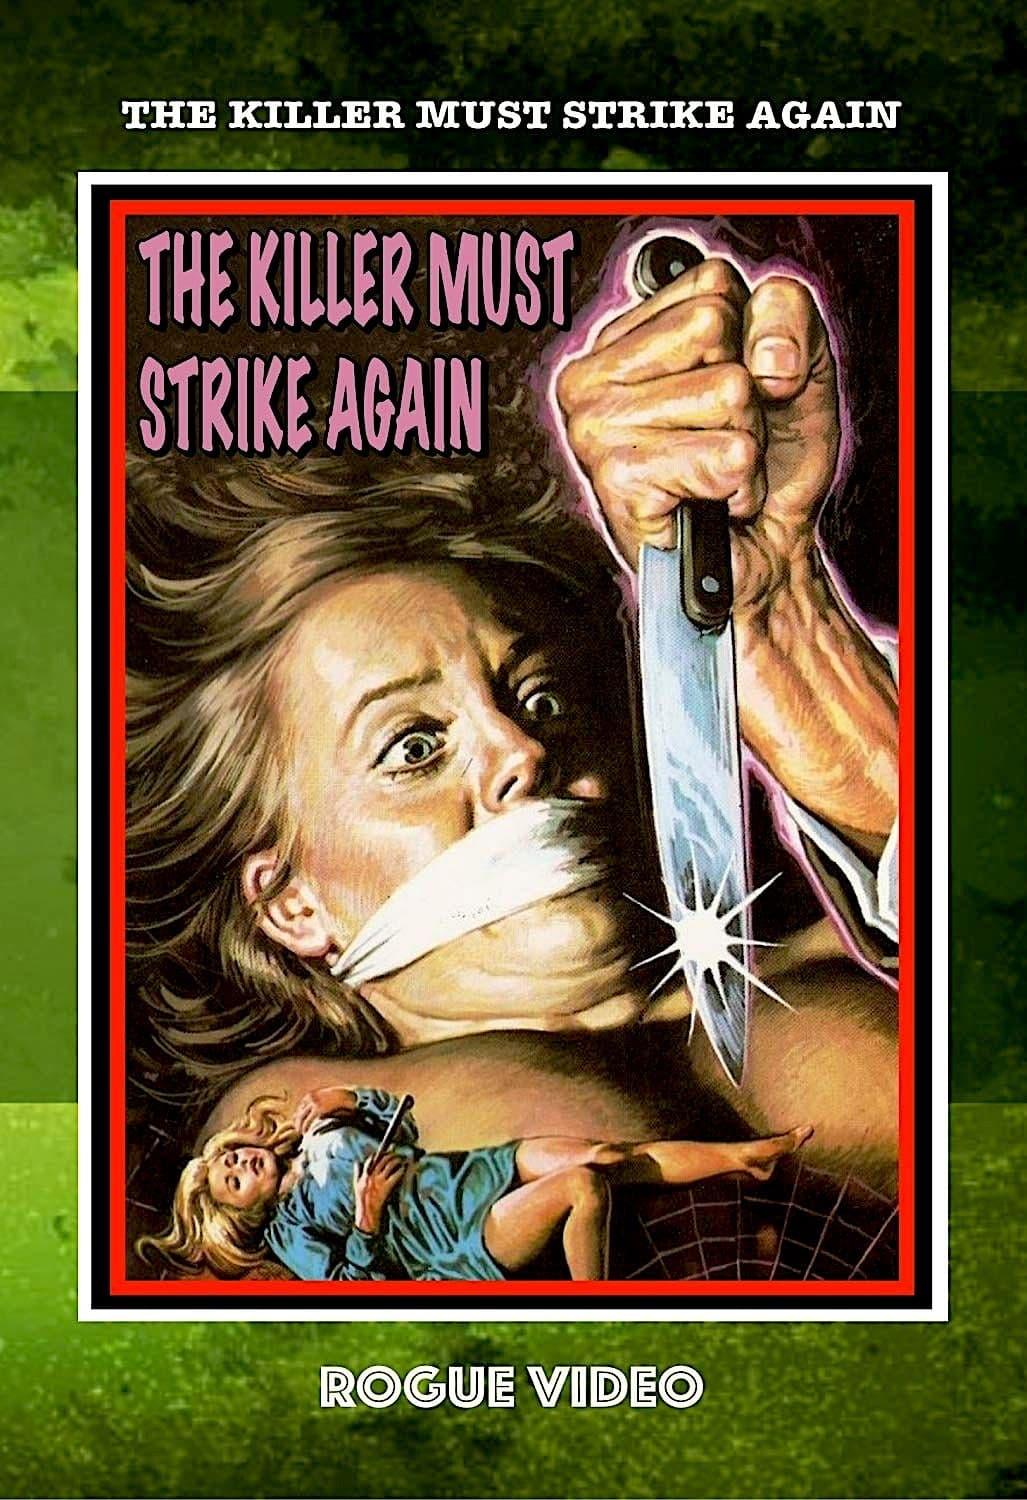 The Killer Must Kill Again poster